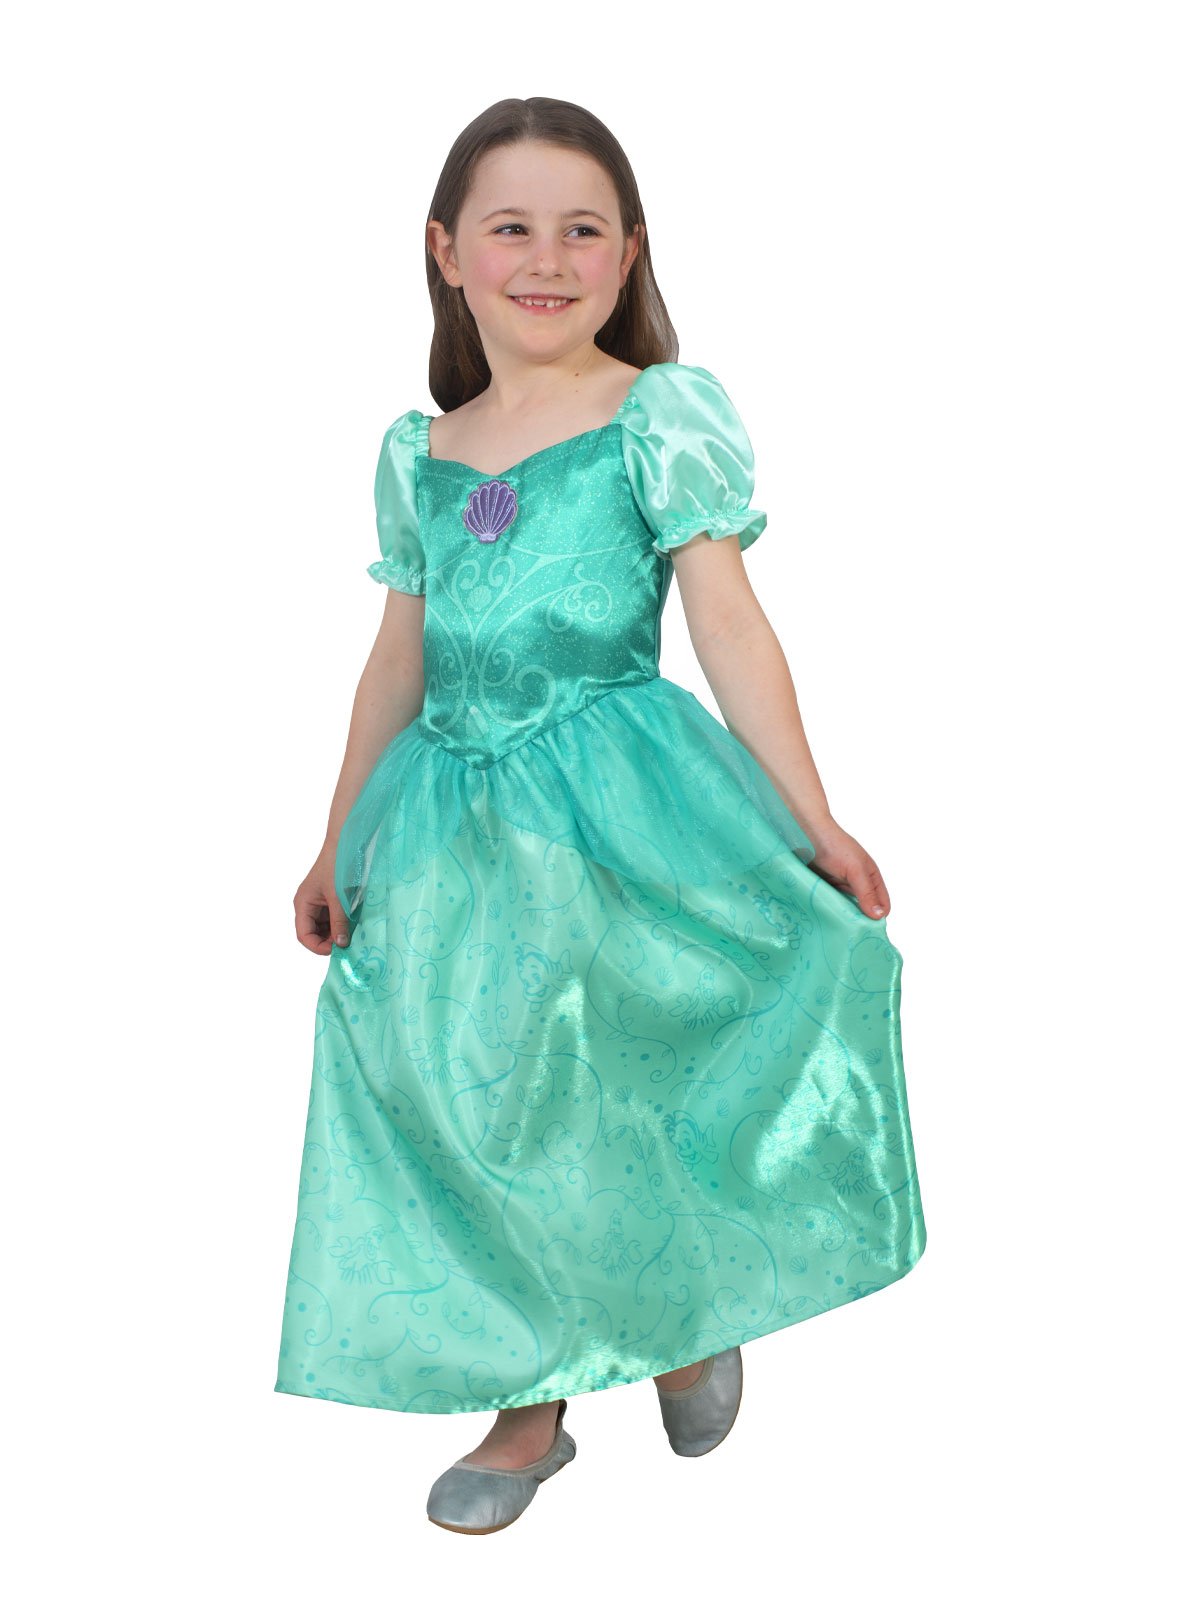 Costume Child Ariel Disney Princess 4-6